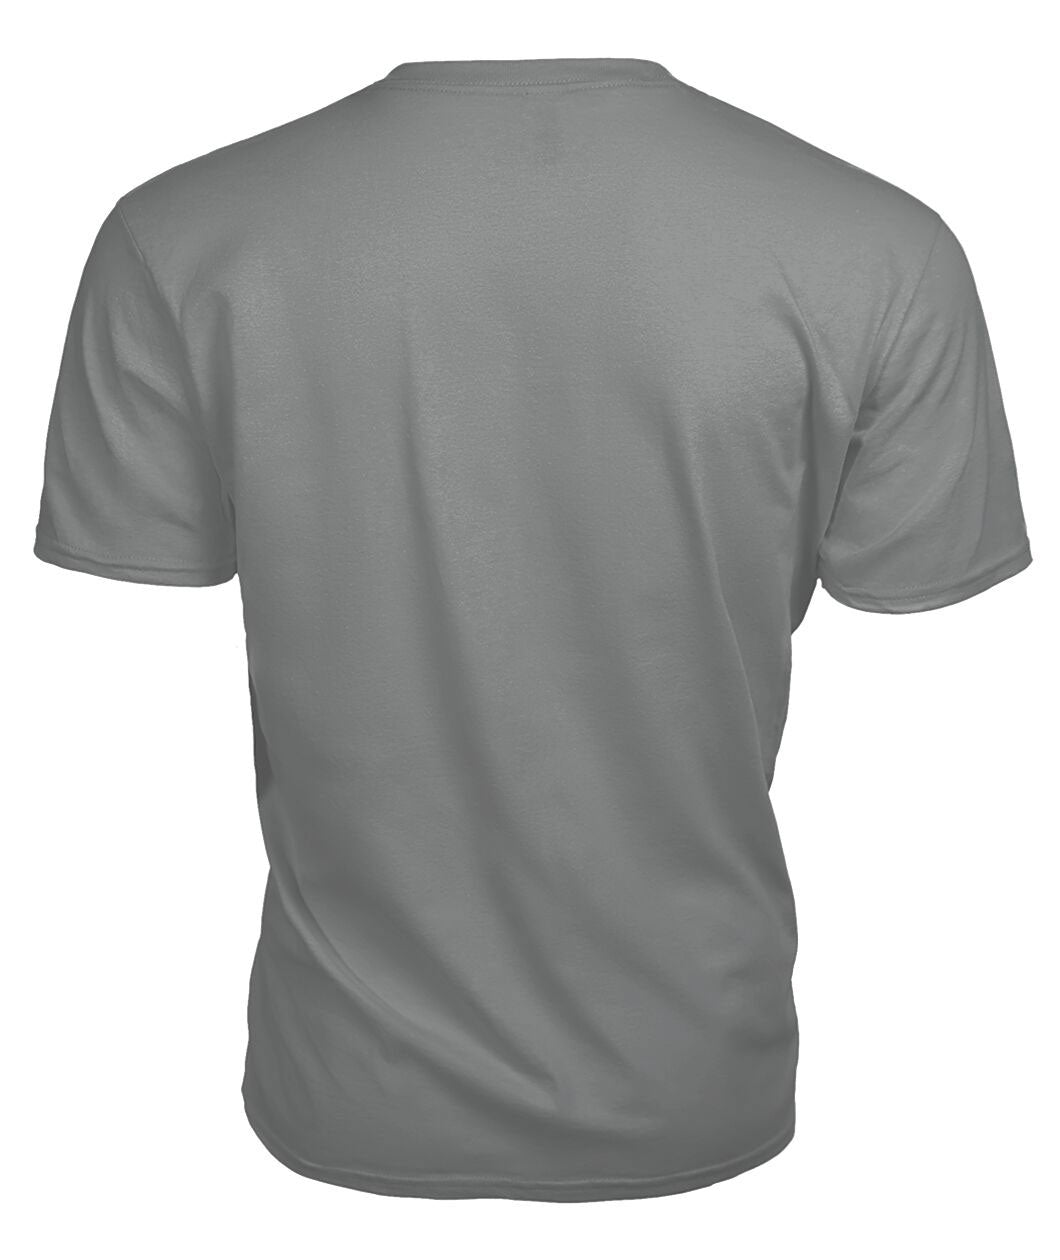 Strang (or Strange) Tartan Crest 2D T-shirt - Blood Runs Through My Veins Style